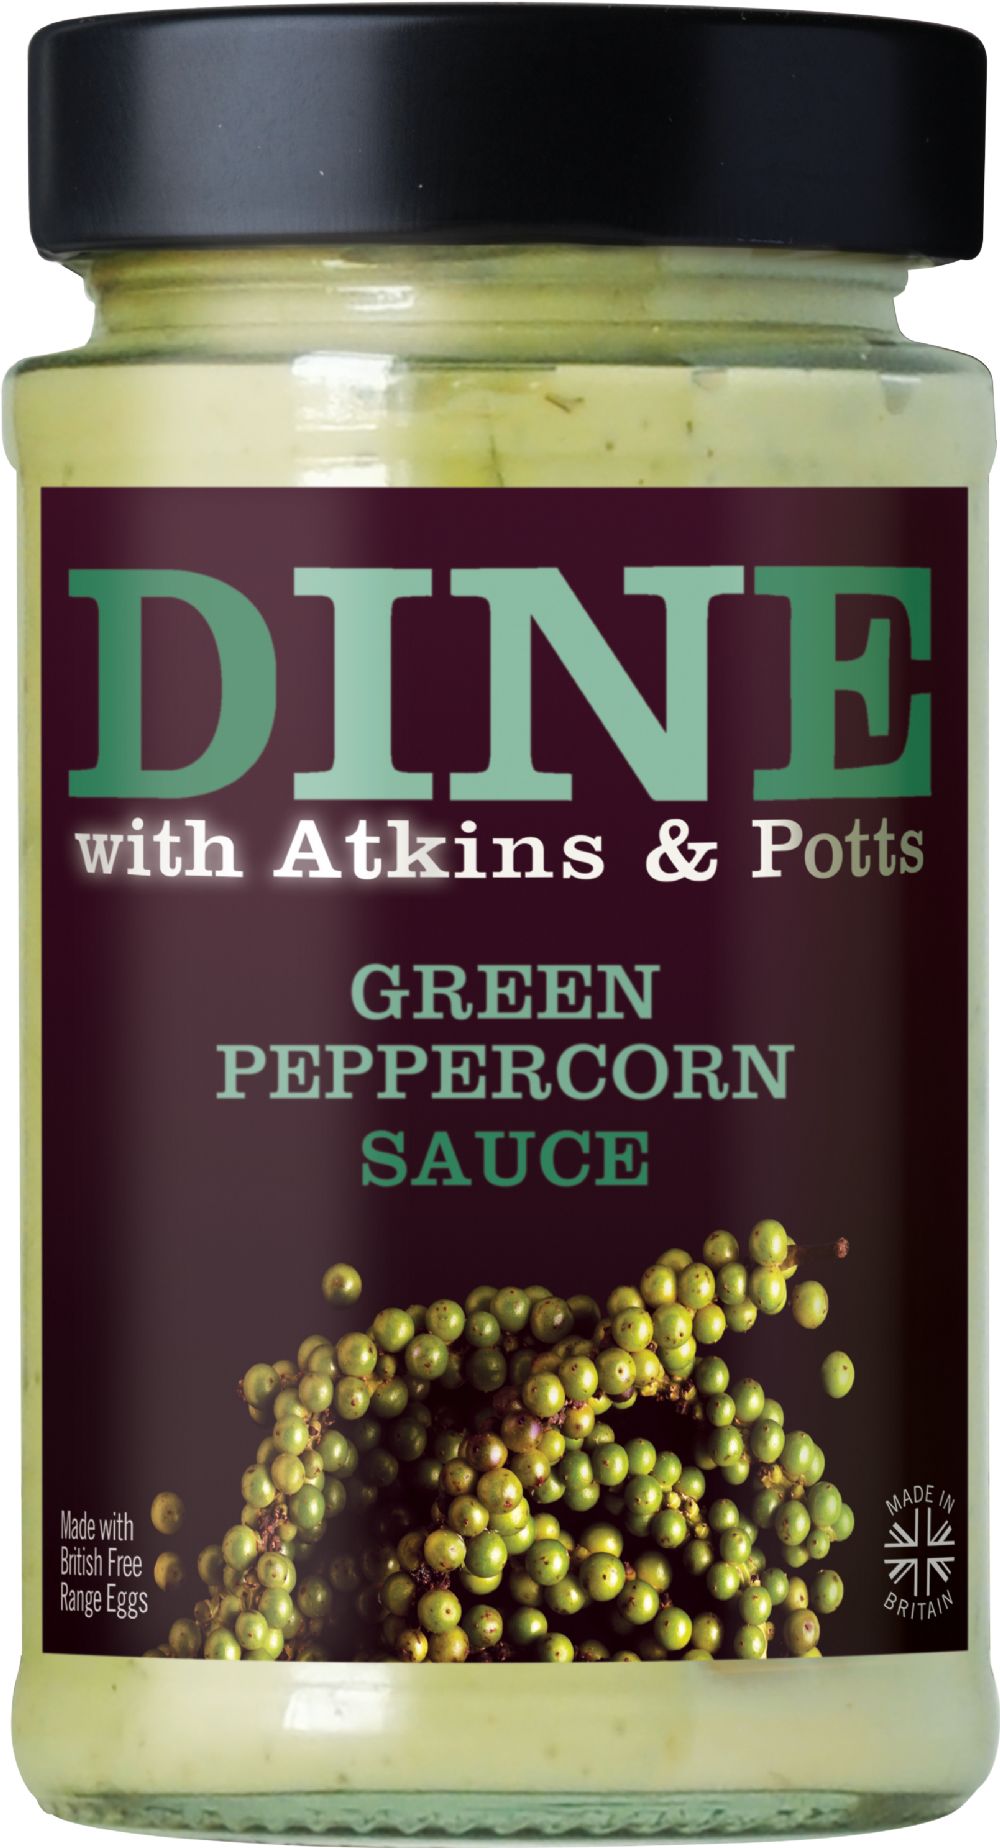 Atkins & Potts Green Peppercorn Sauce Other Sauces, Pastes